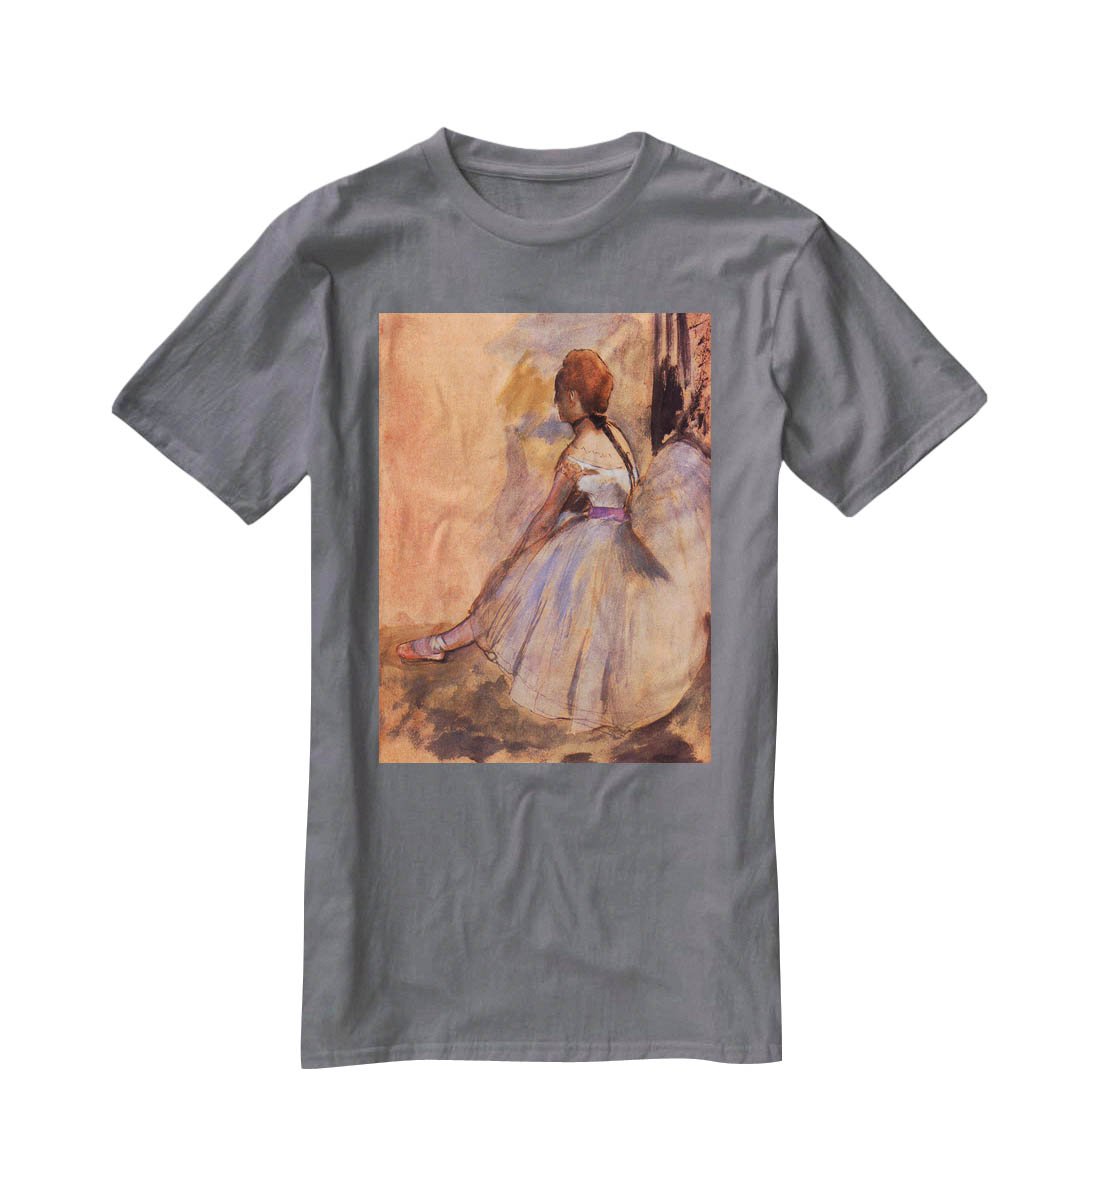 Sitting dancer with extended left leg by Degas T-Shirt - Canvas Art Rocks - 3